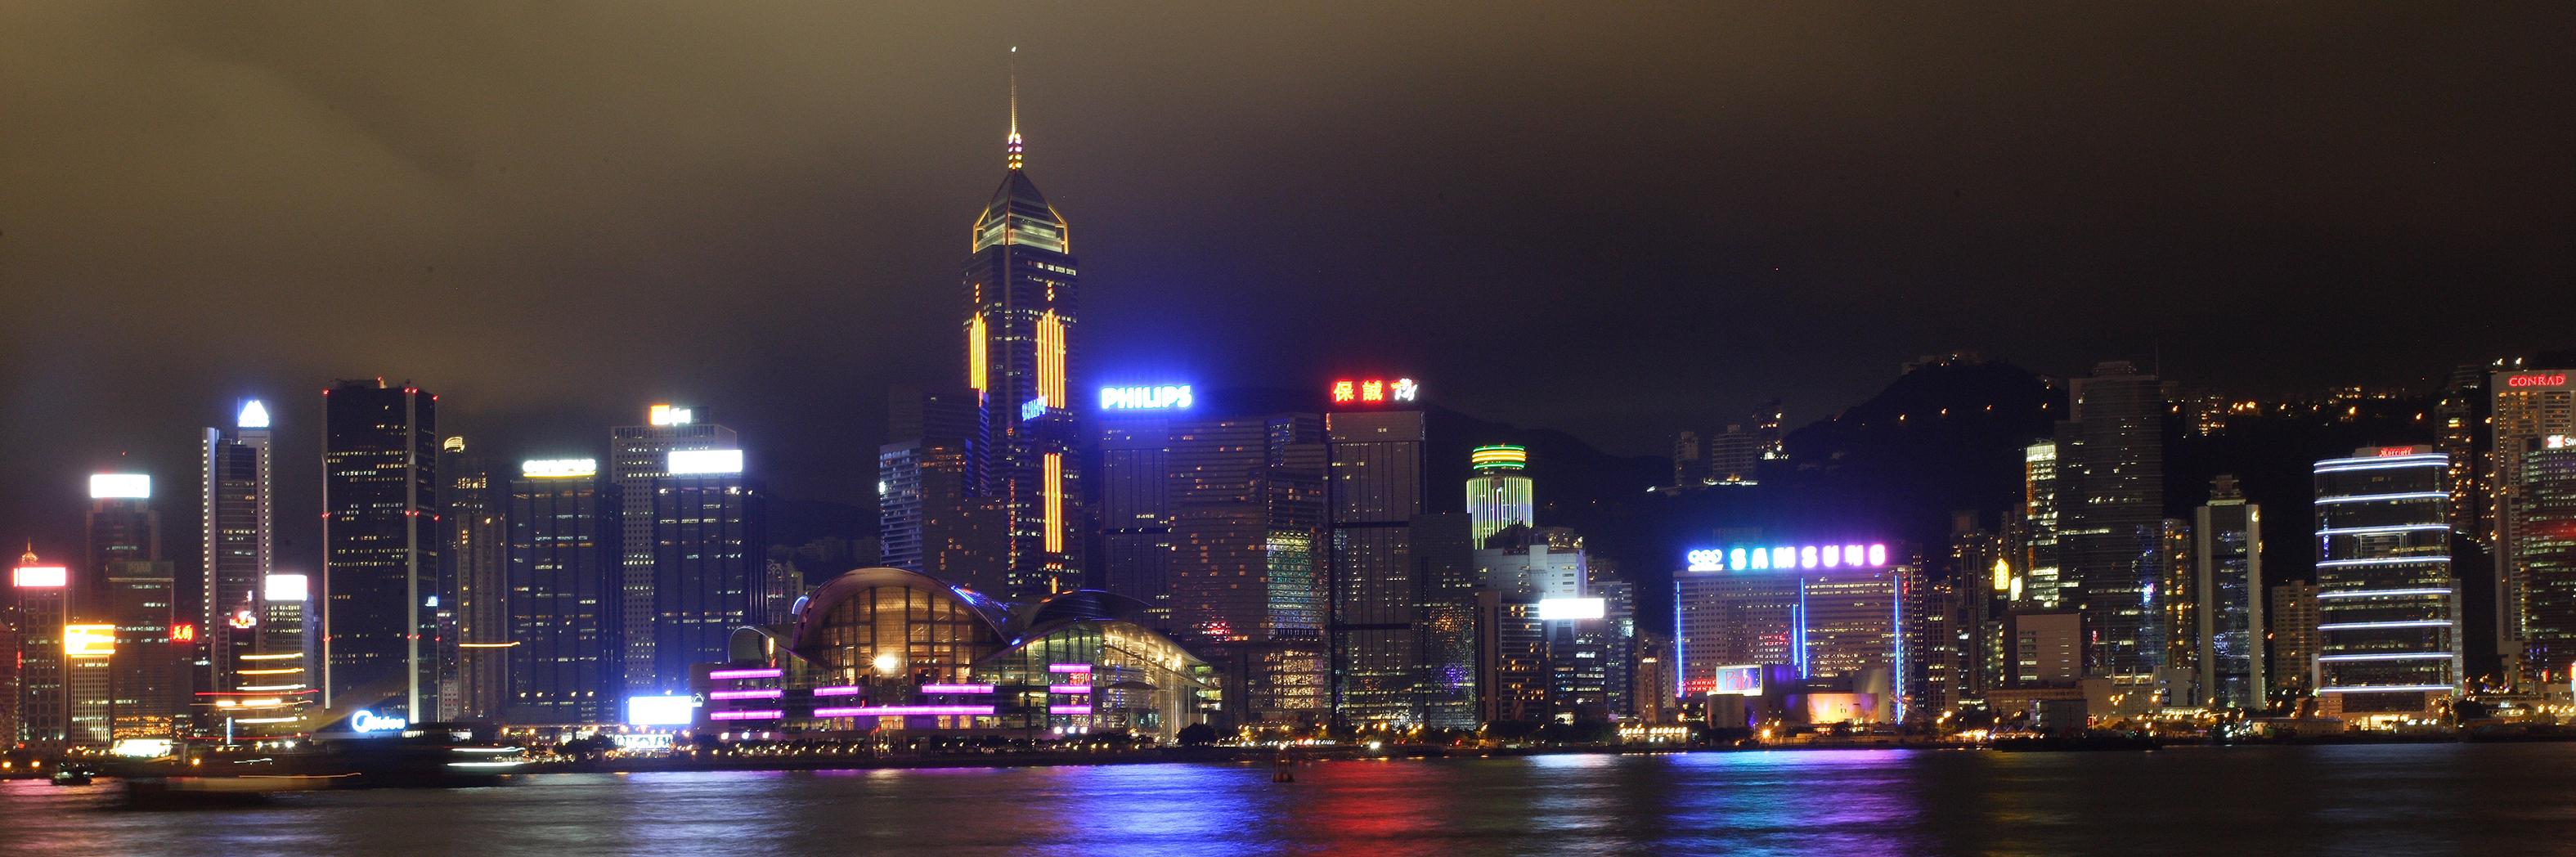 Hong Kong Skyline 2 web | Keith Jones Photography